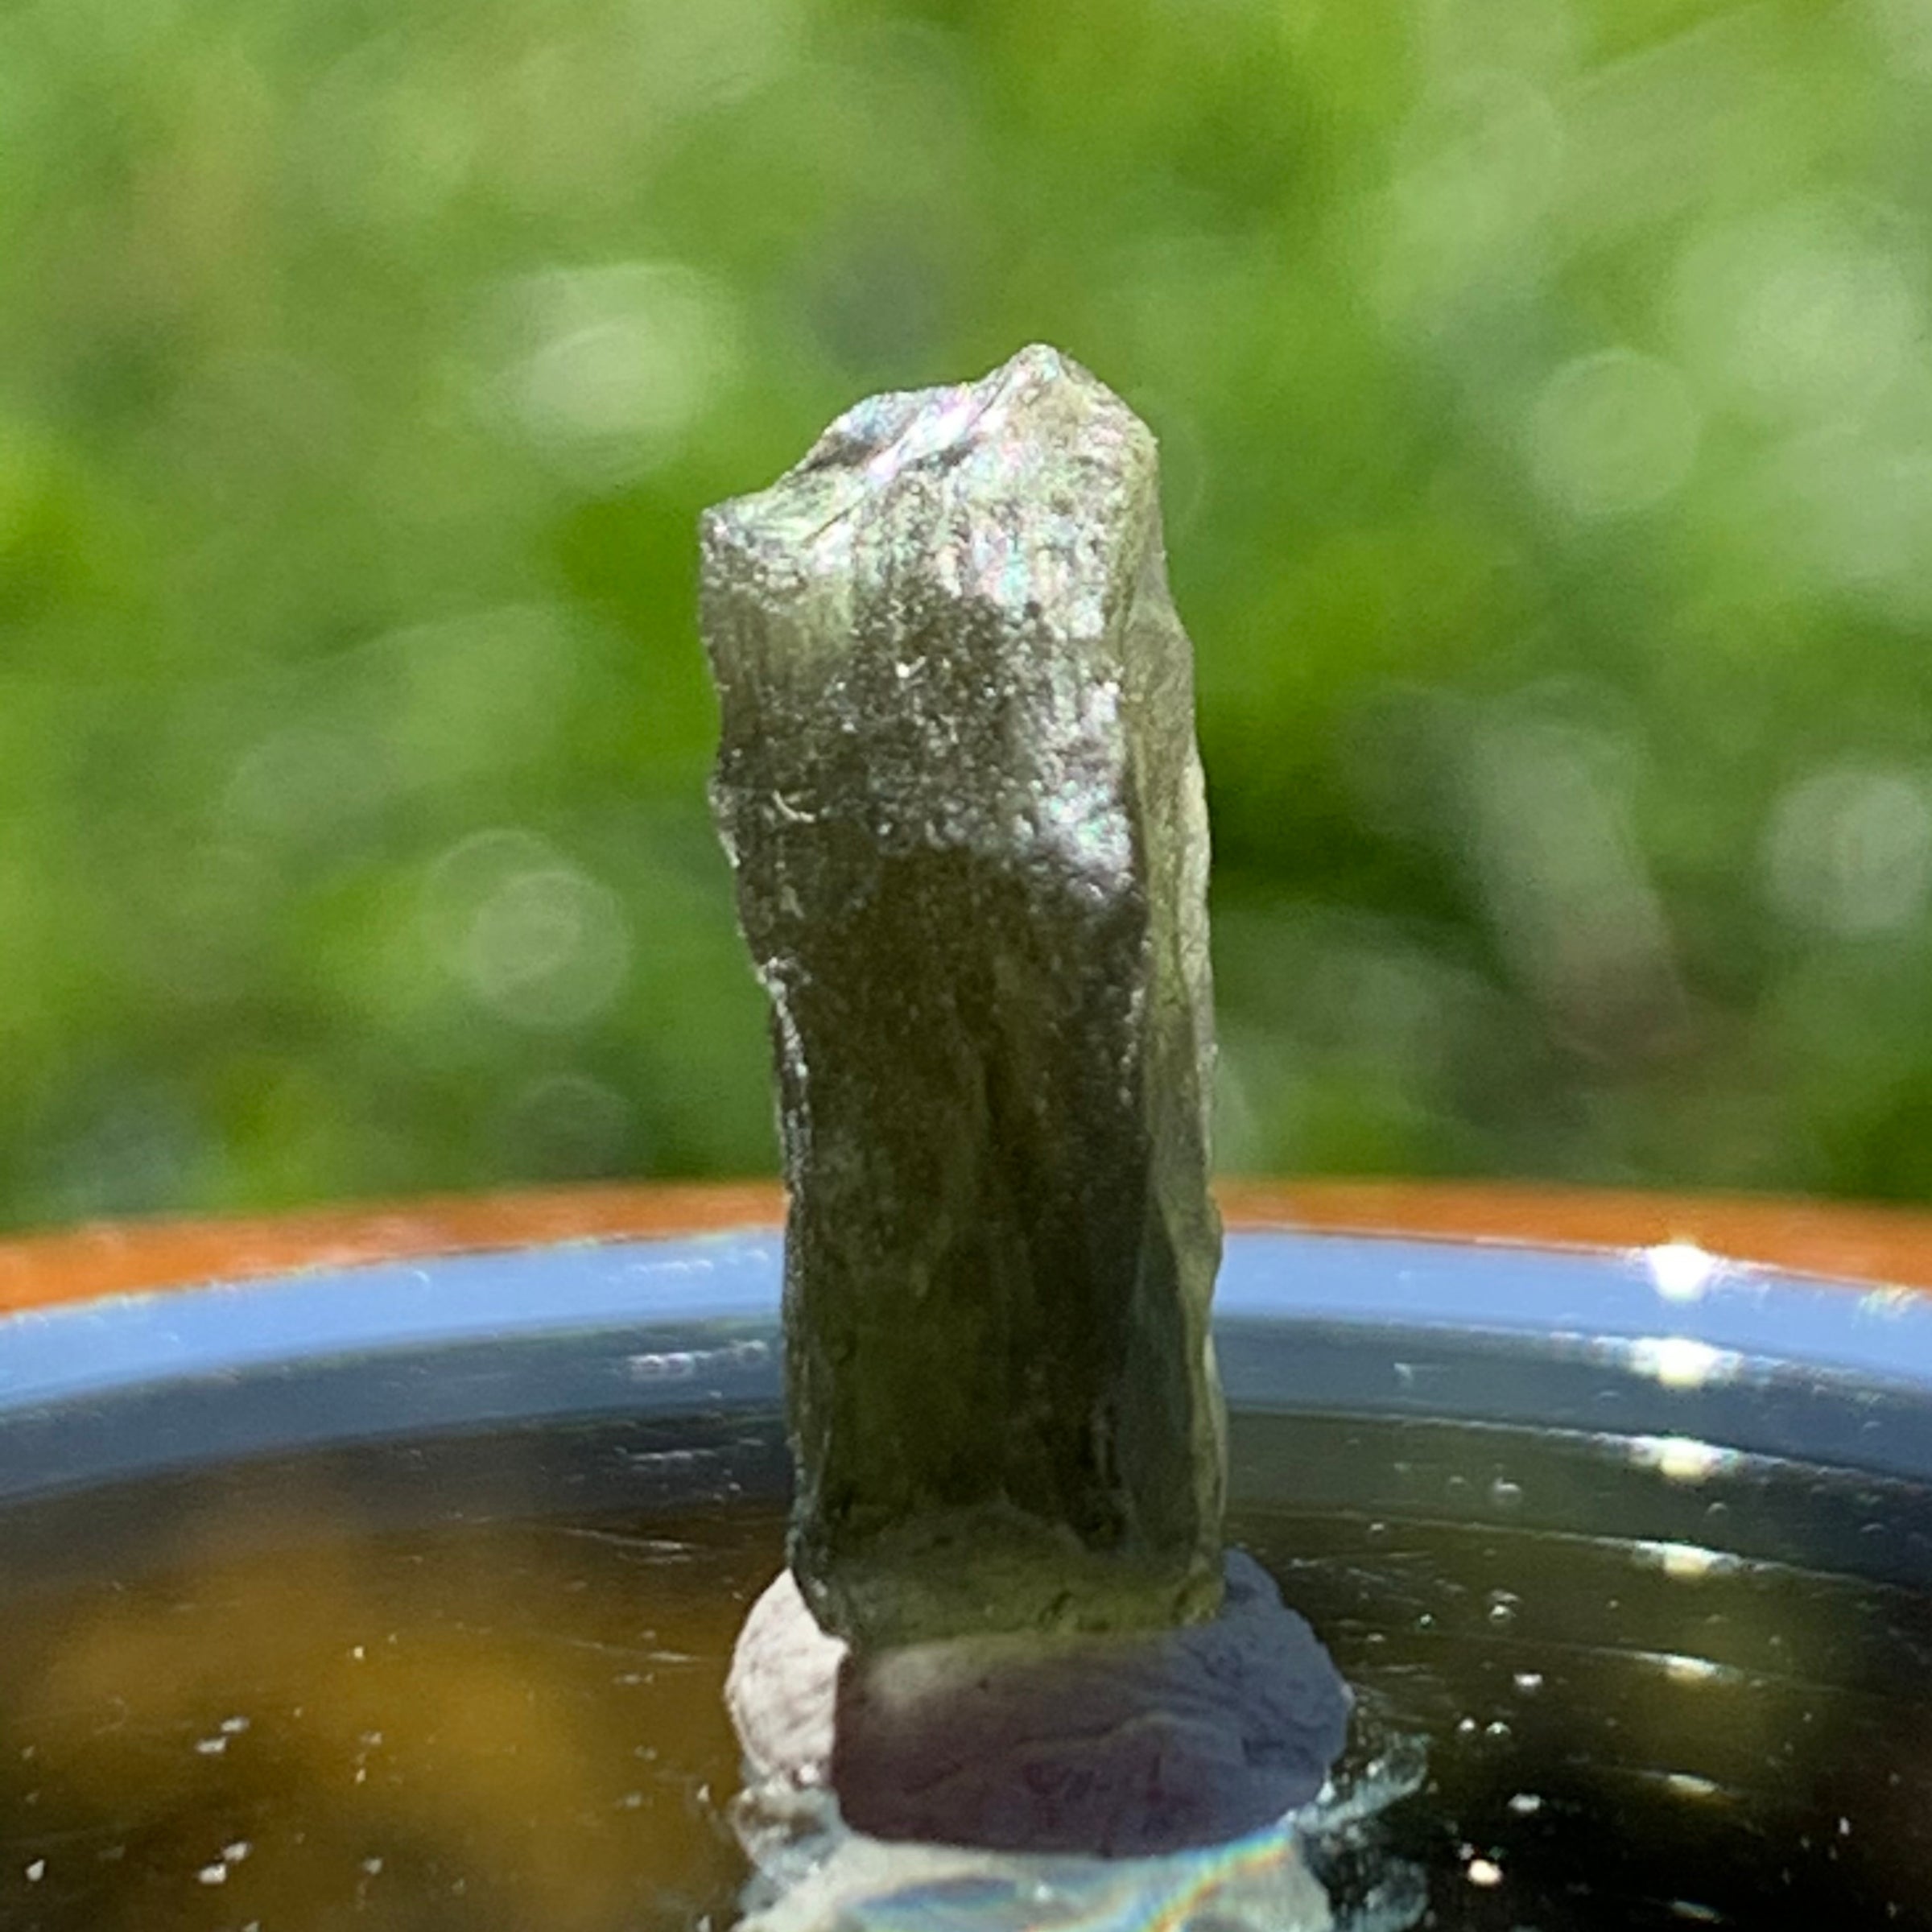 Genuine Moldavite 1.1 grams Small